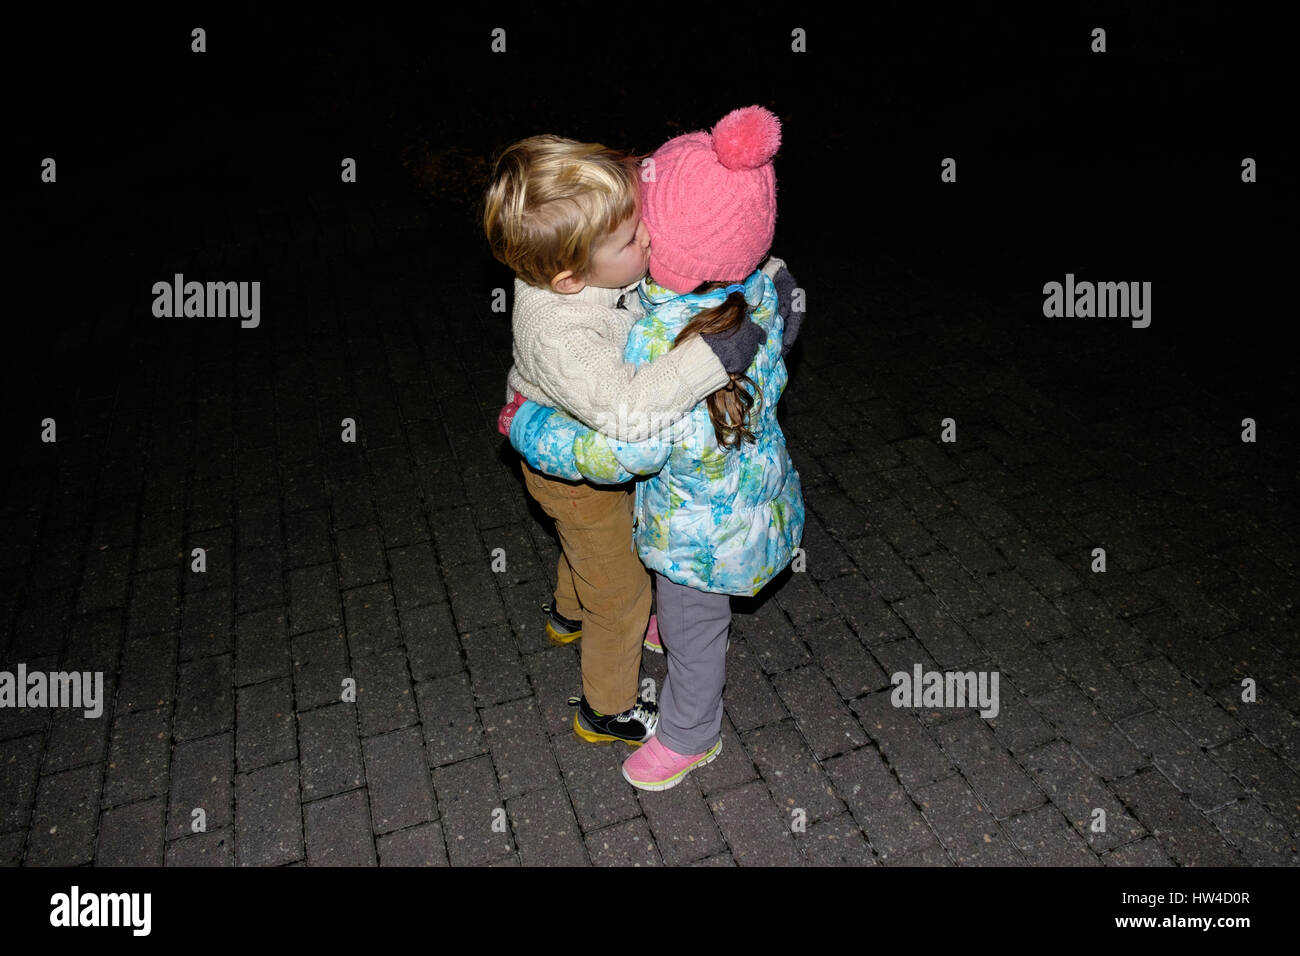 Boy ad girl hugging outdoors at night Stock Photo